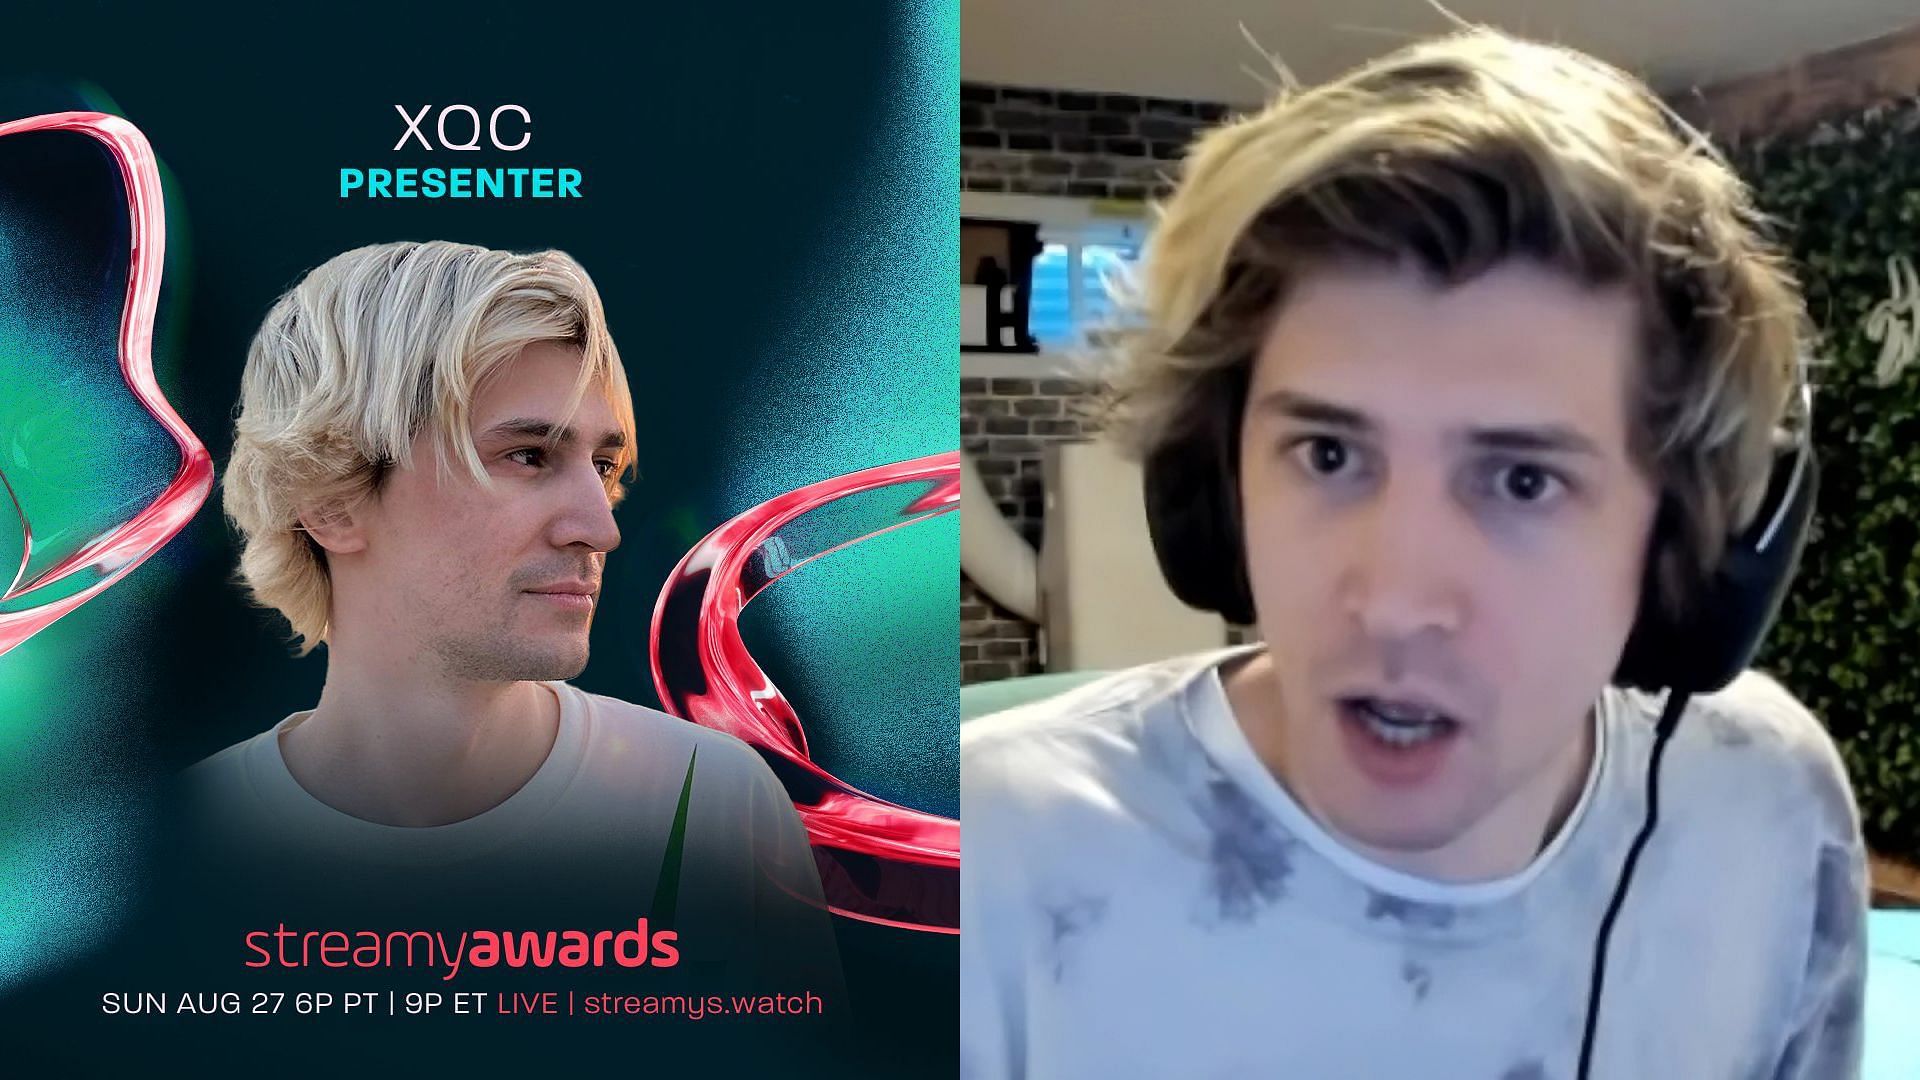 xQc shocked after Streamy Awards announced him as a presenter (Image via Streamy Awards/X)